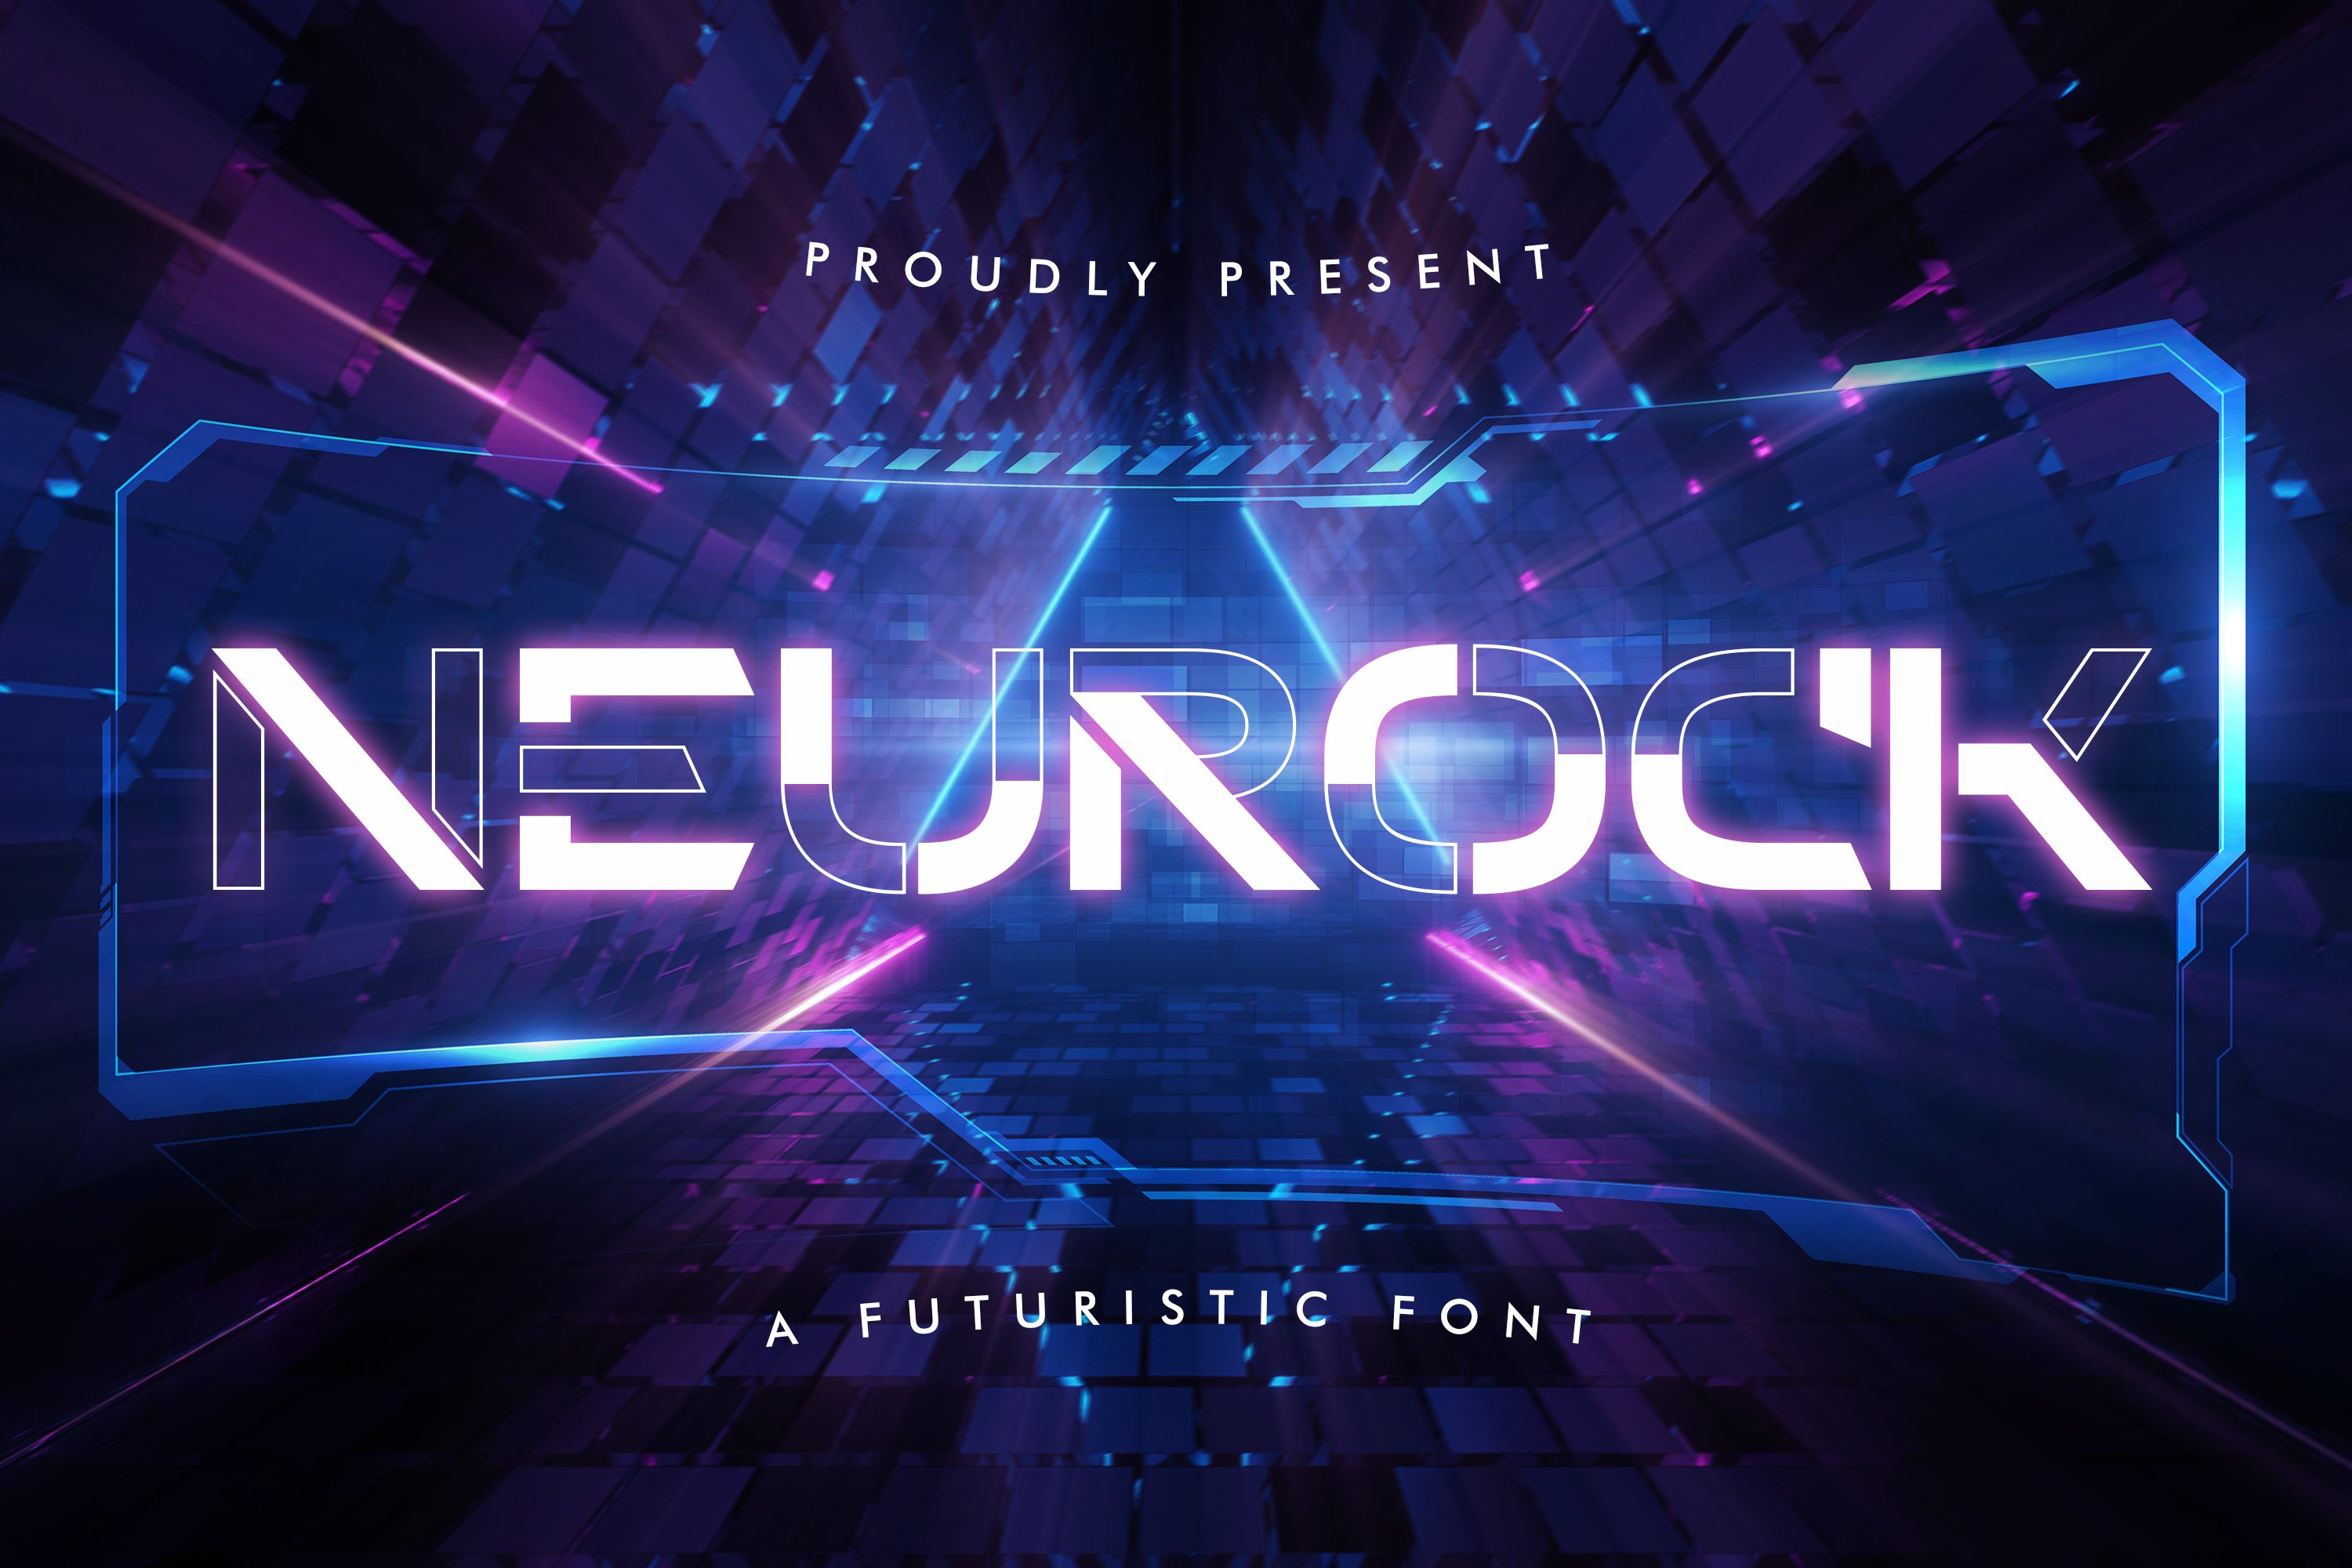 Neurock - A Futuristic Font cover image.